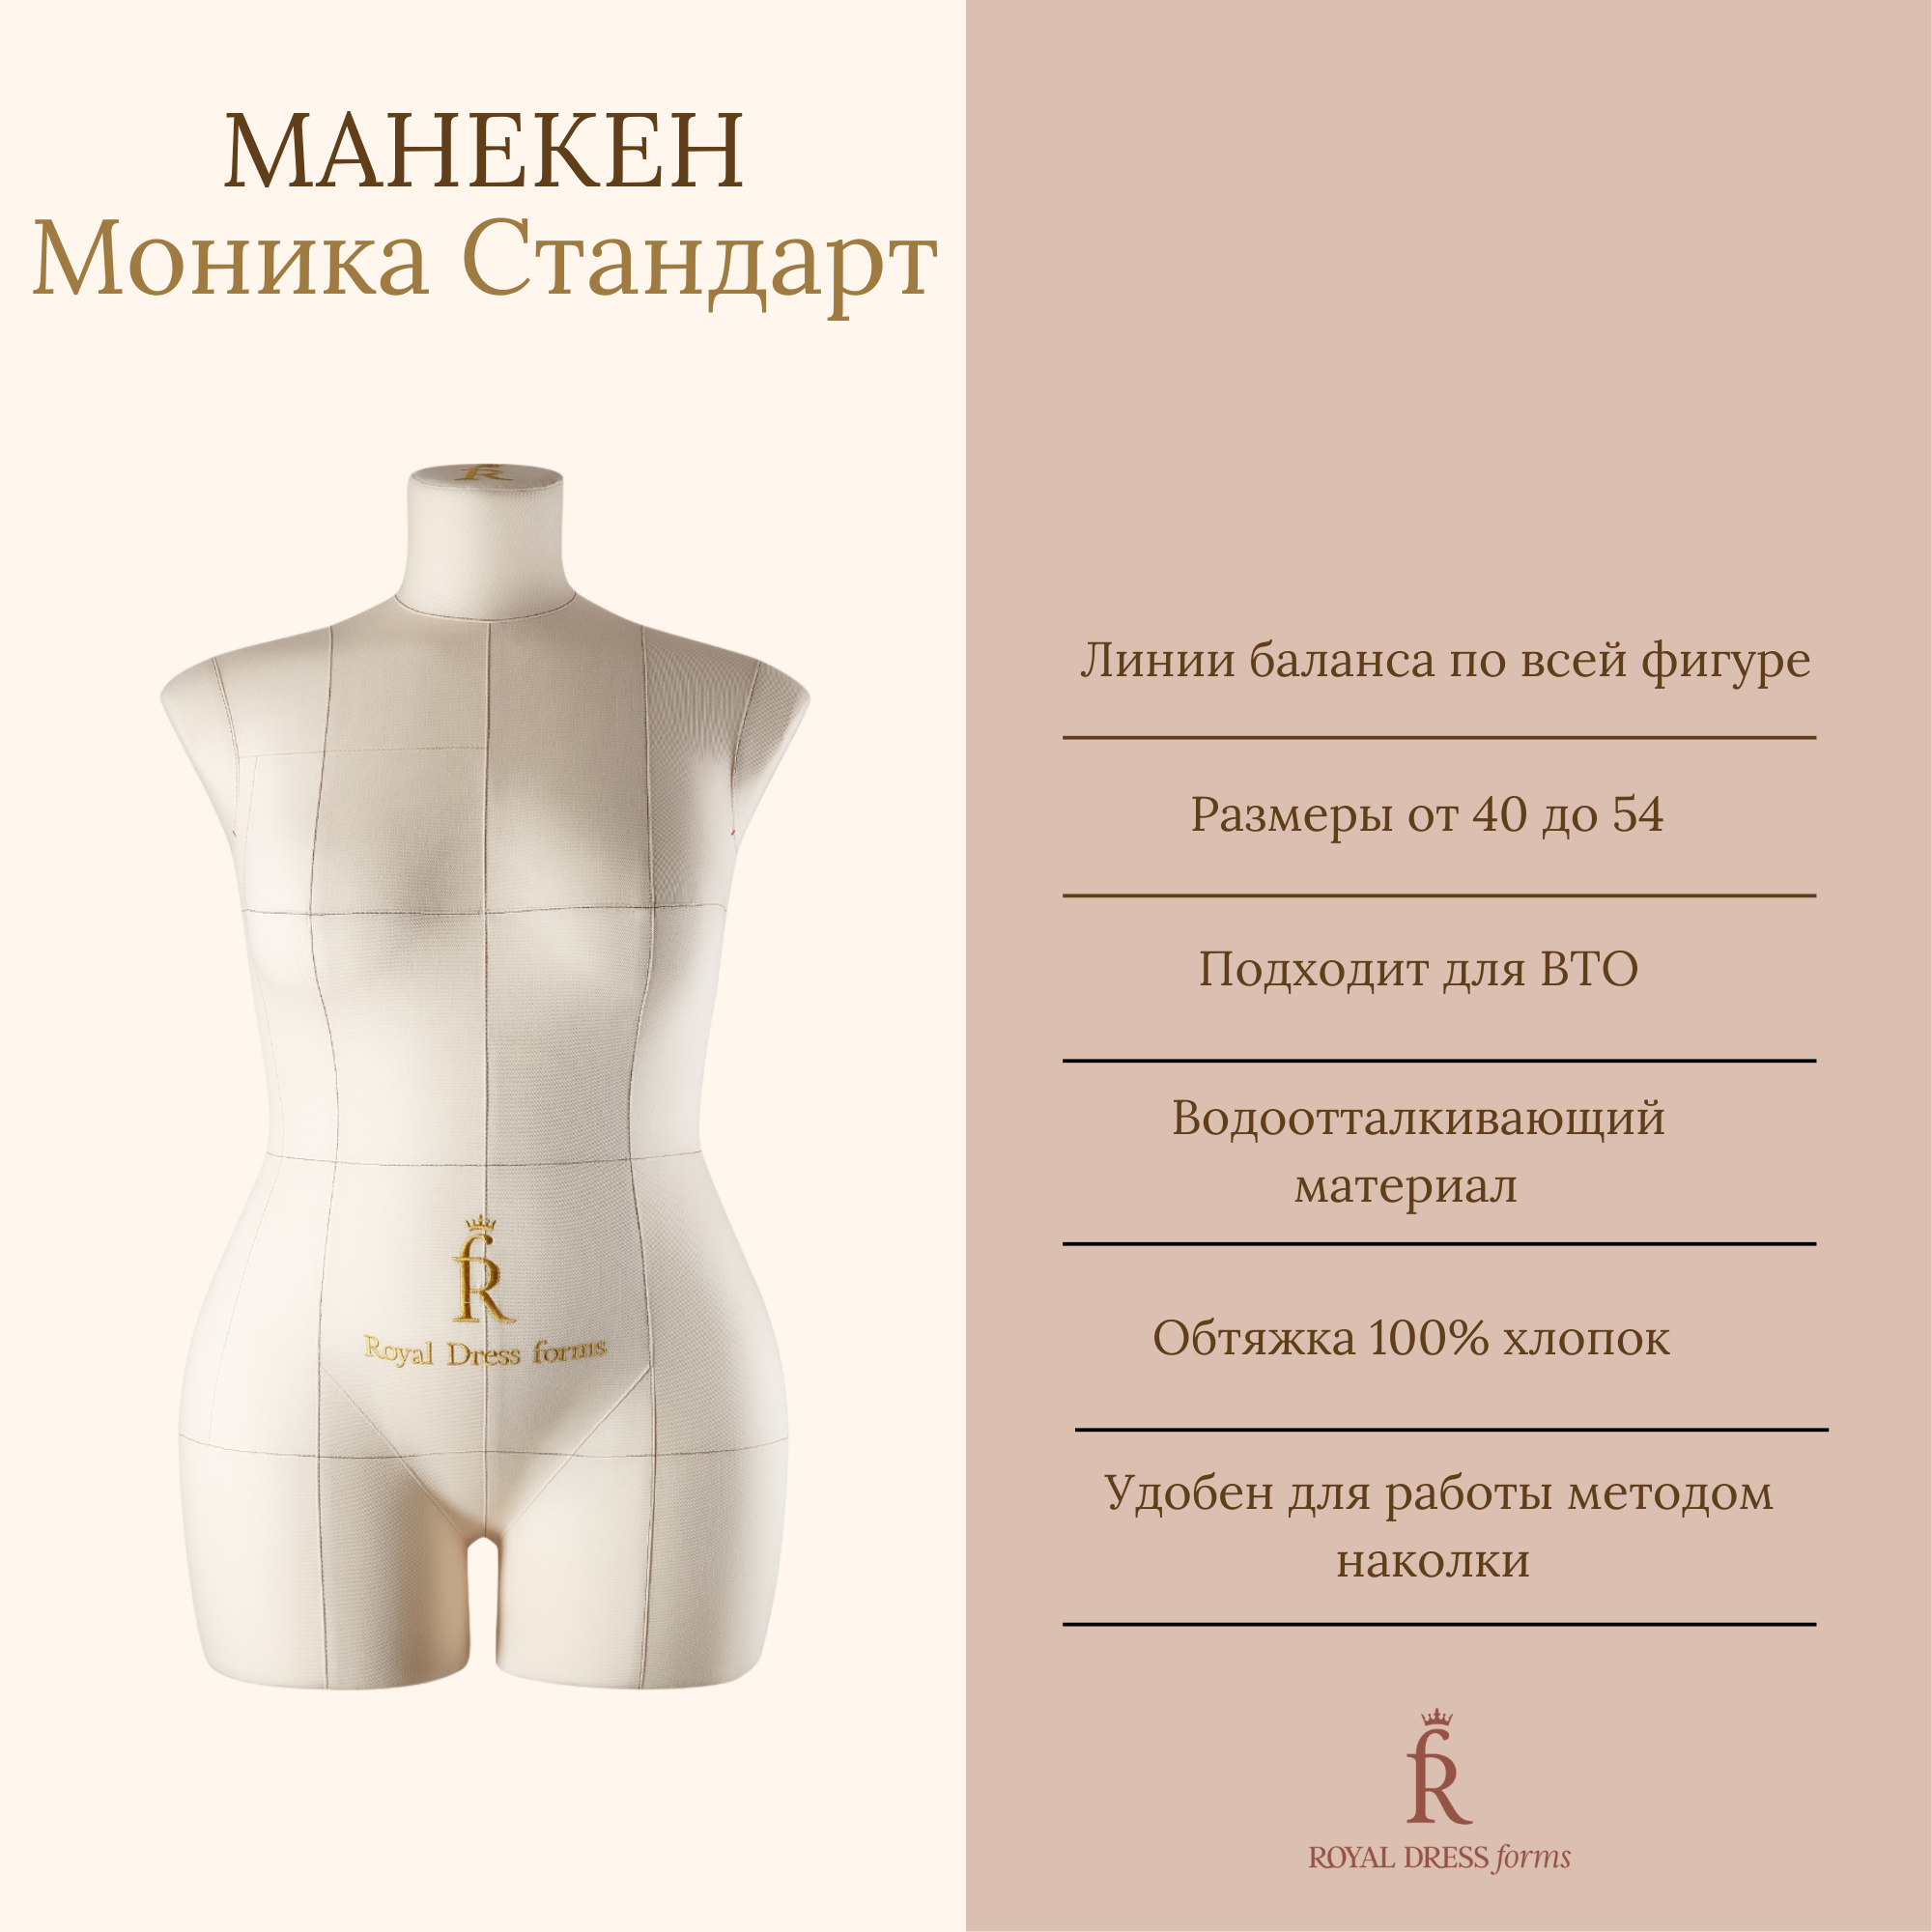 Манекен портновский Моника Стандарт, Royal Dress forms размер 50